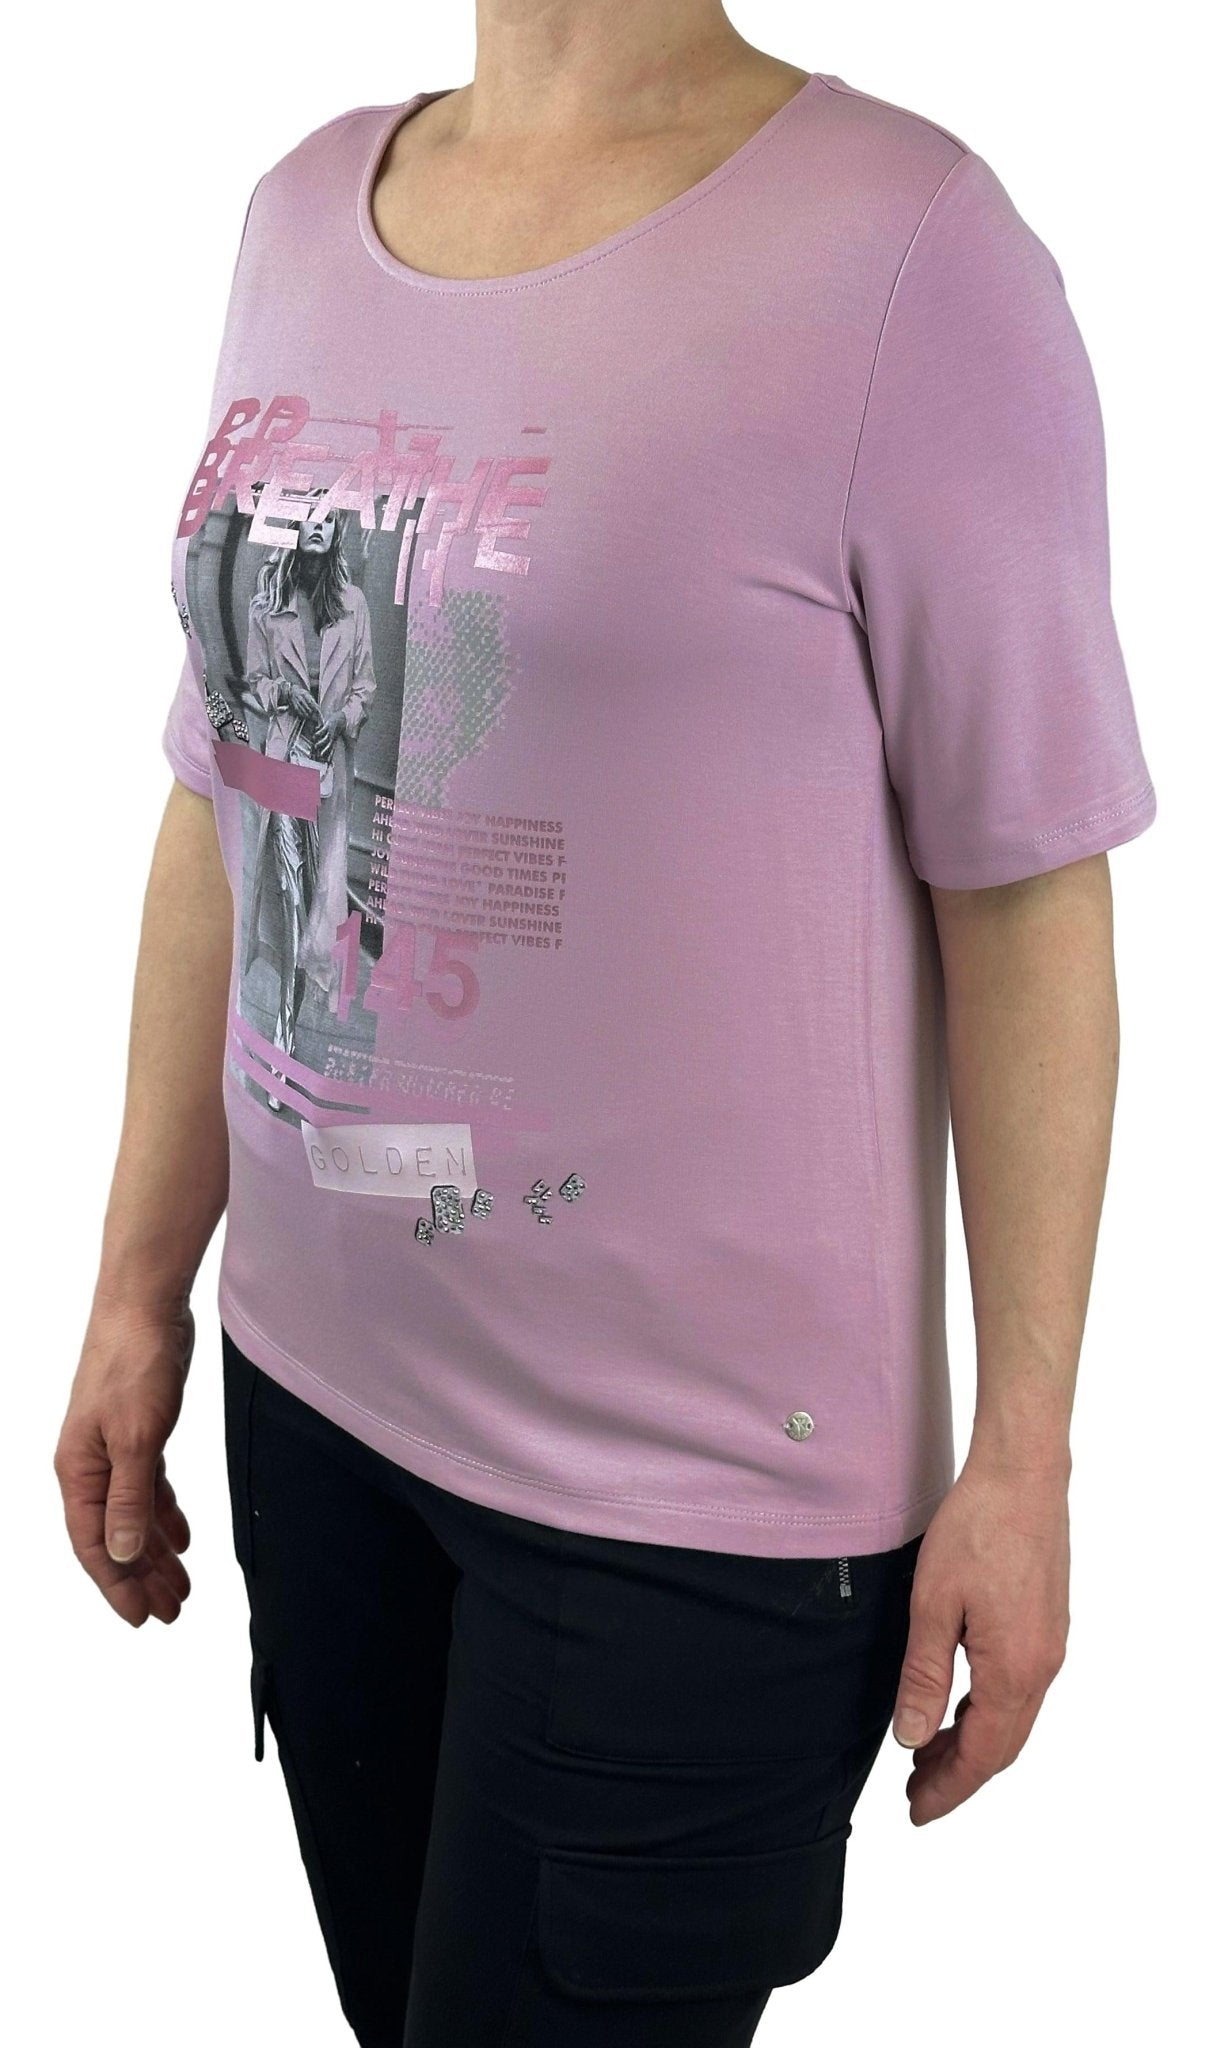 Monari Shirt 408222. Mode von Monari